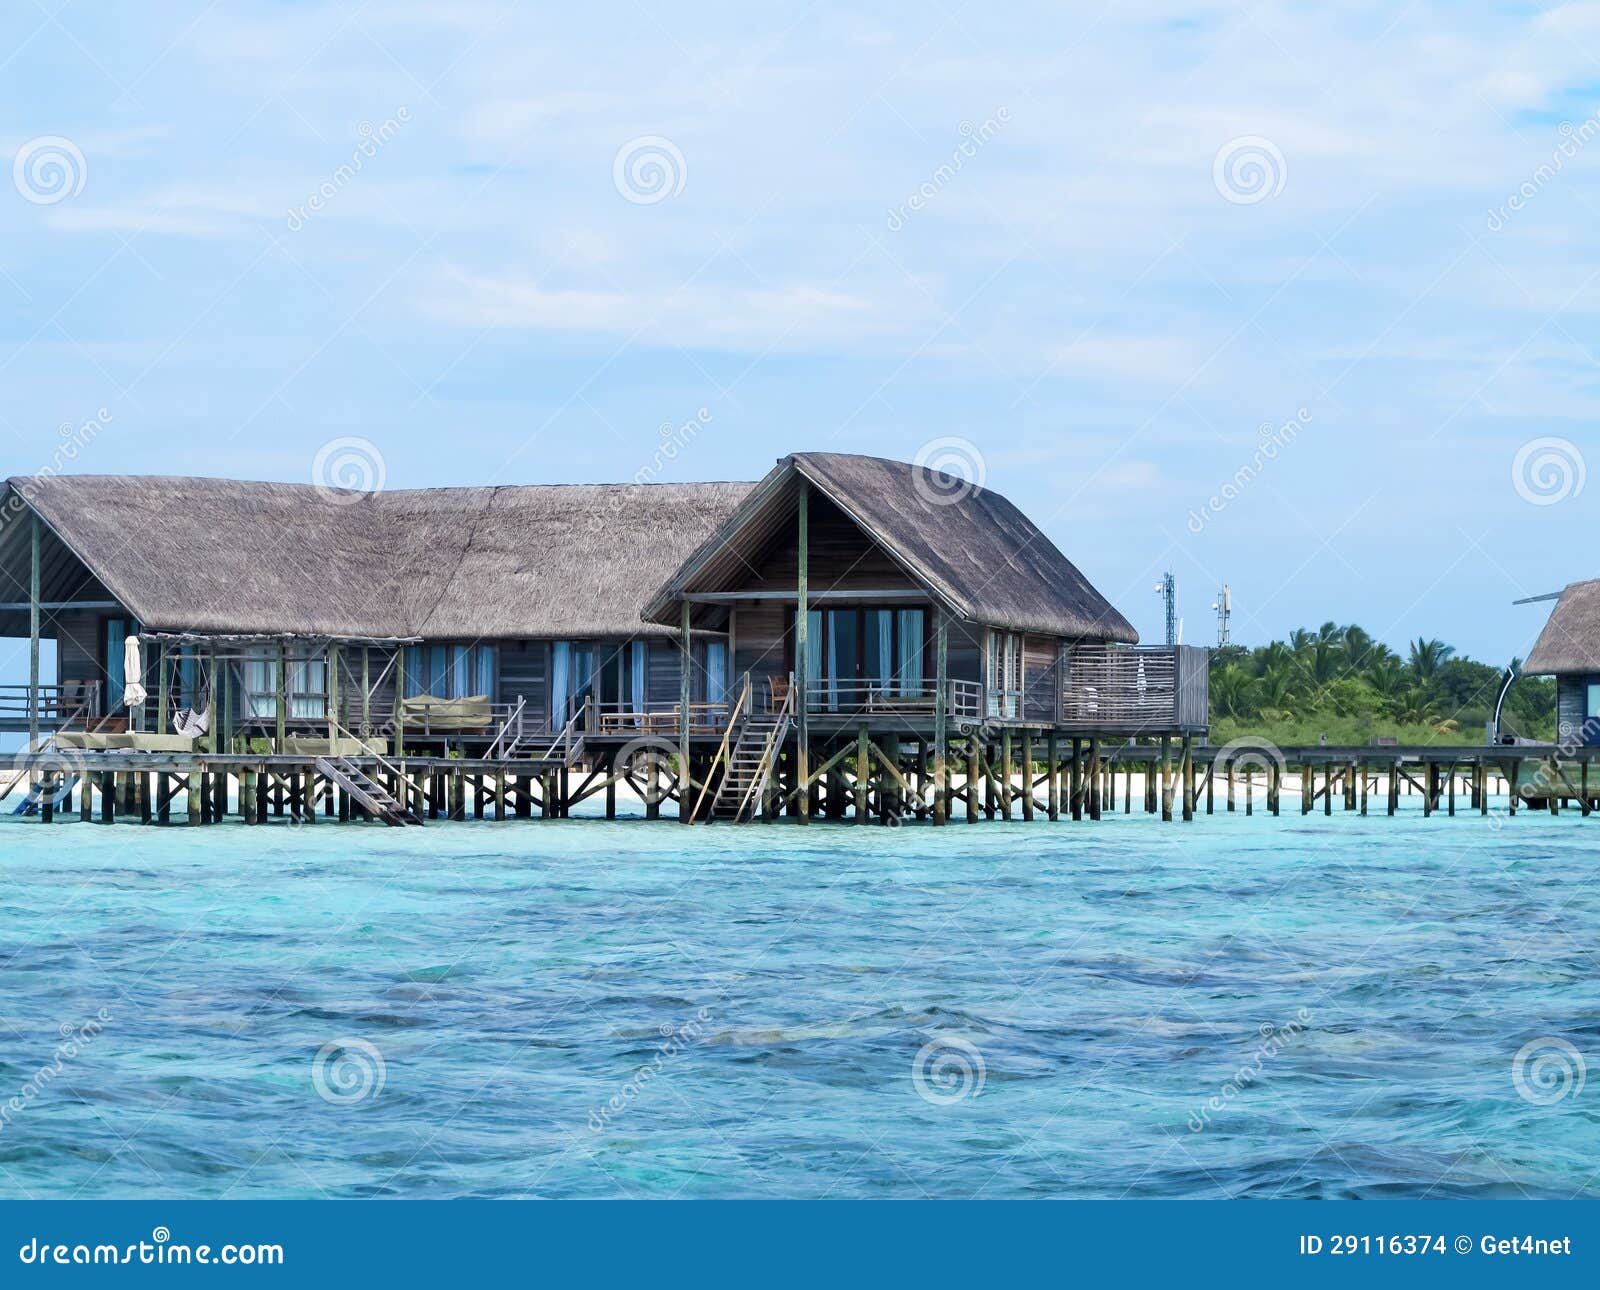 sea facing cottages on maldive island